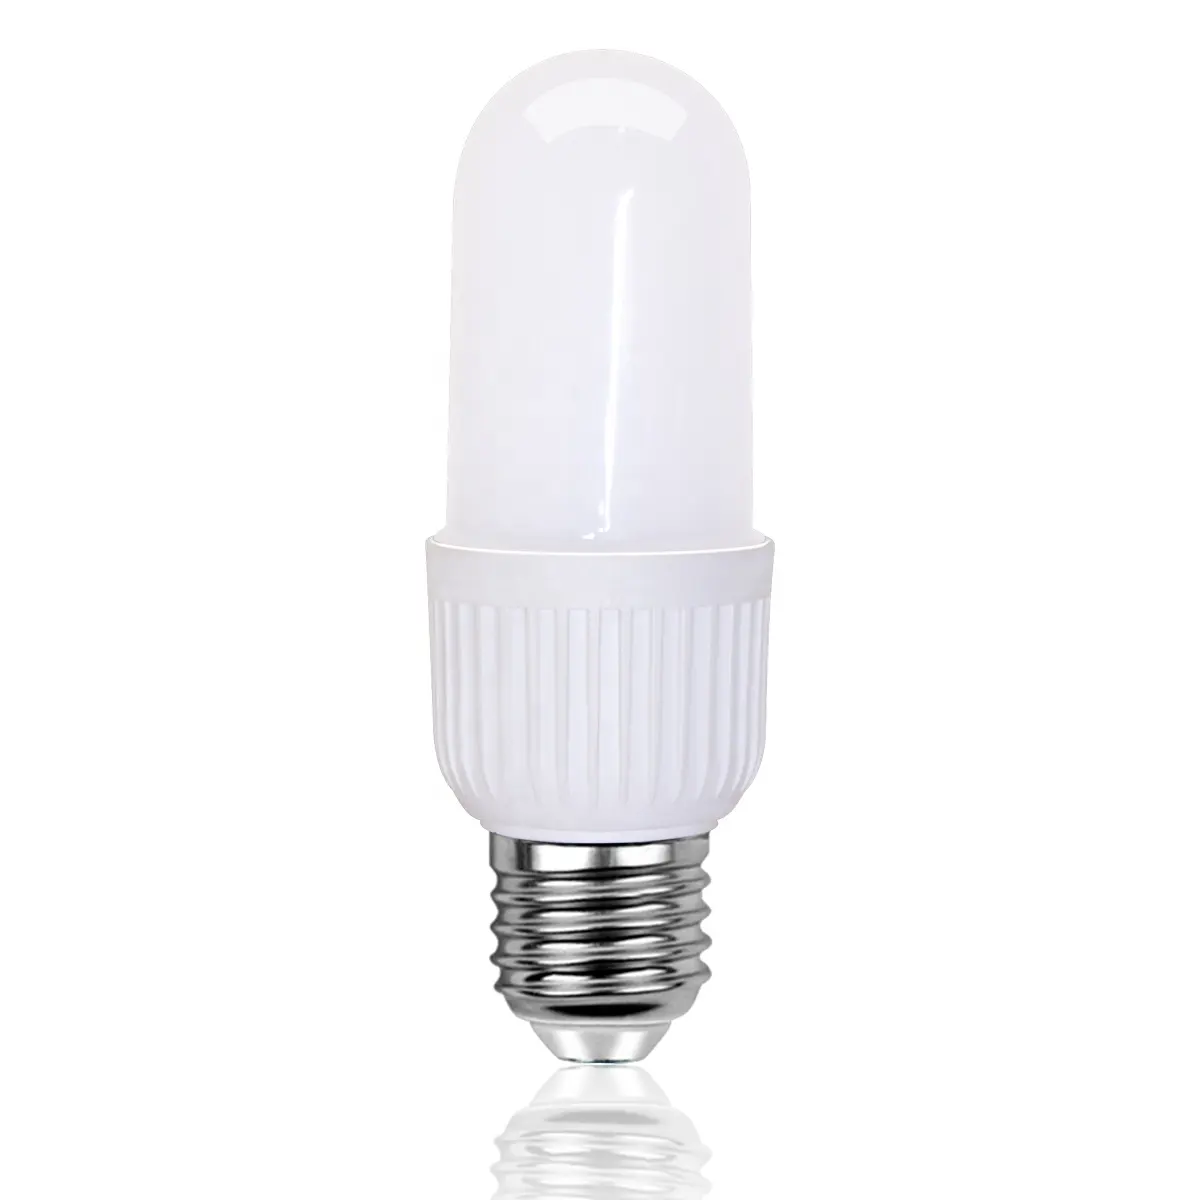 Hohe Lumen helligkeit Energie sparende Bombilla 6Watt 12Watt LED-Lampen Ampulle E27 T40 T45 T-Form Aluminium-LED-Lampen für zu Hause